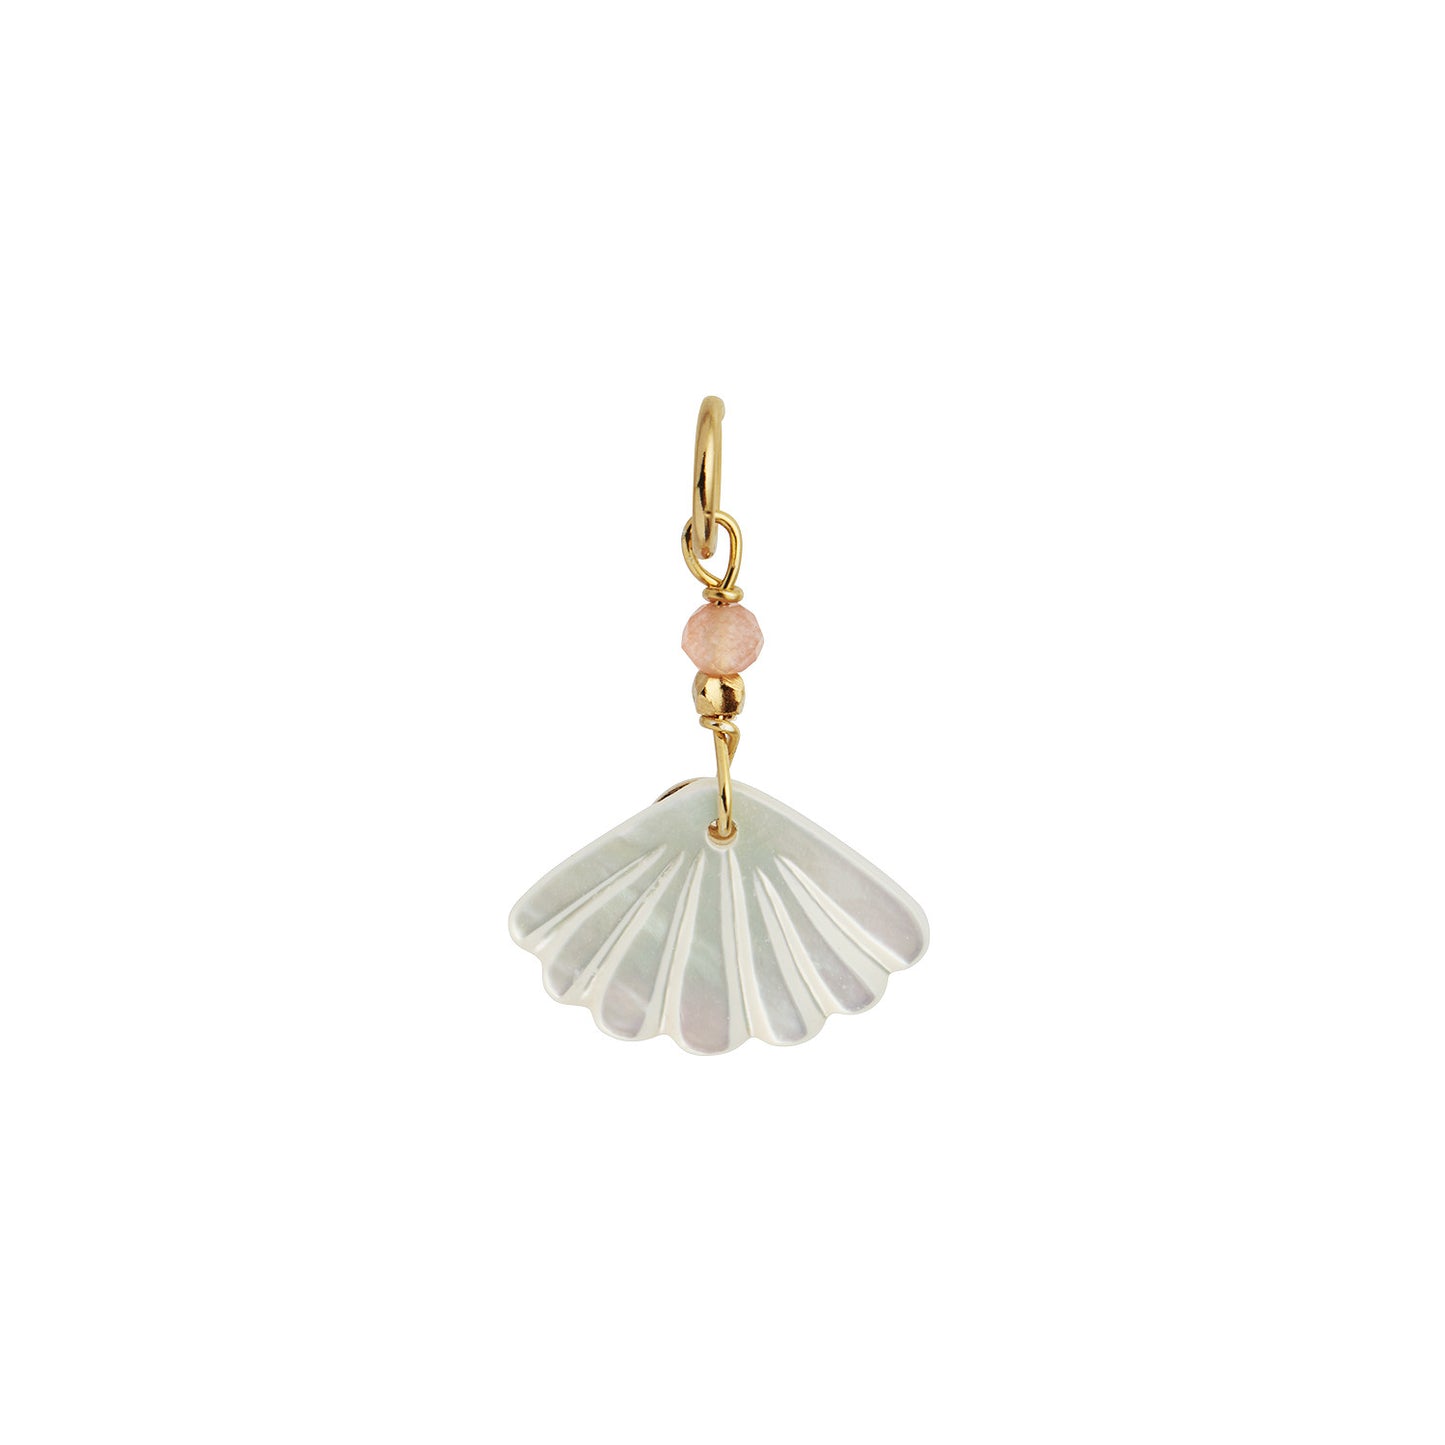 White seashell pendant / Peach